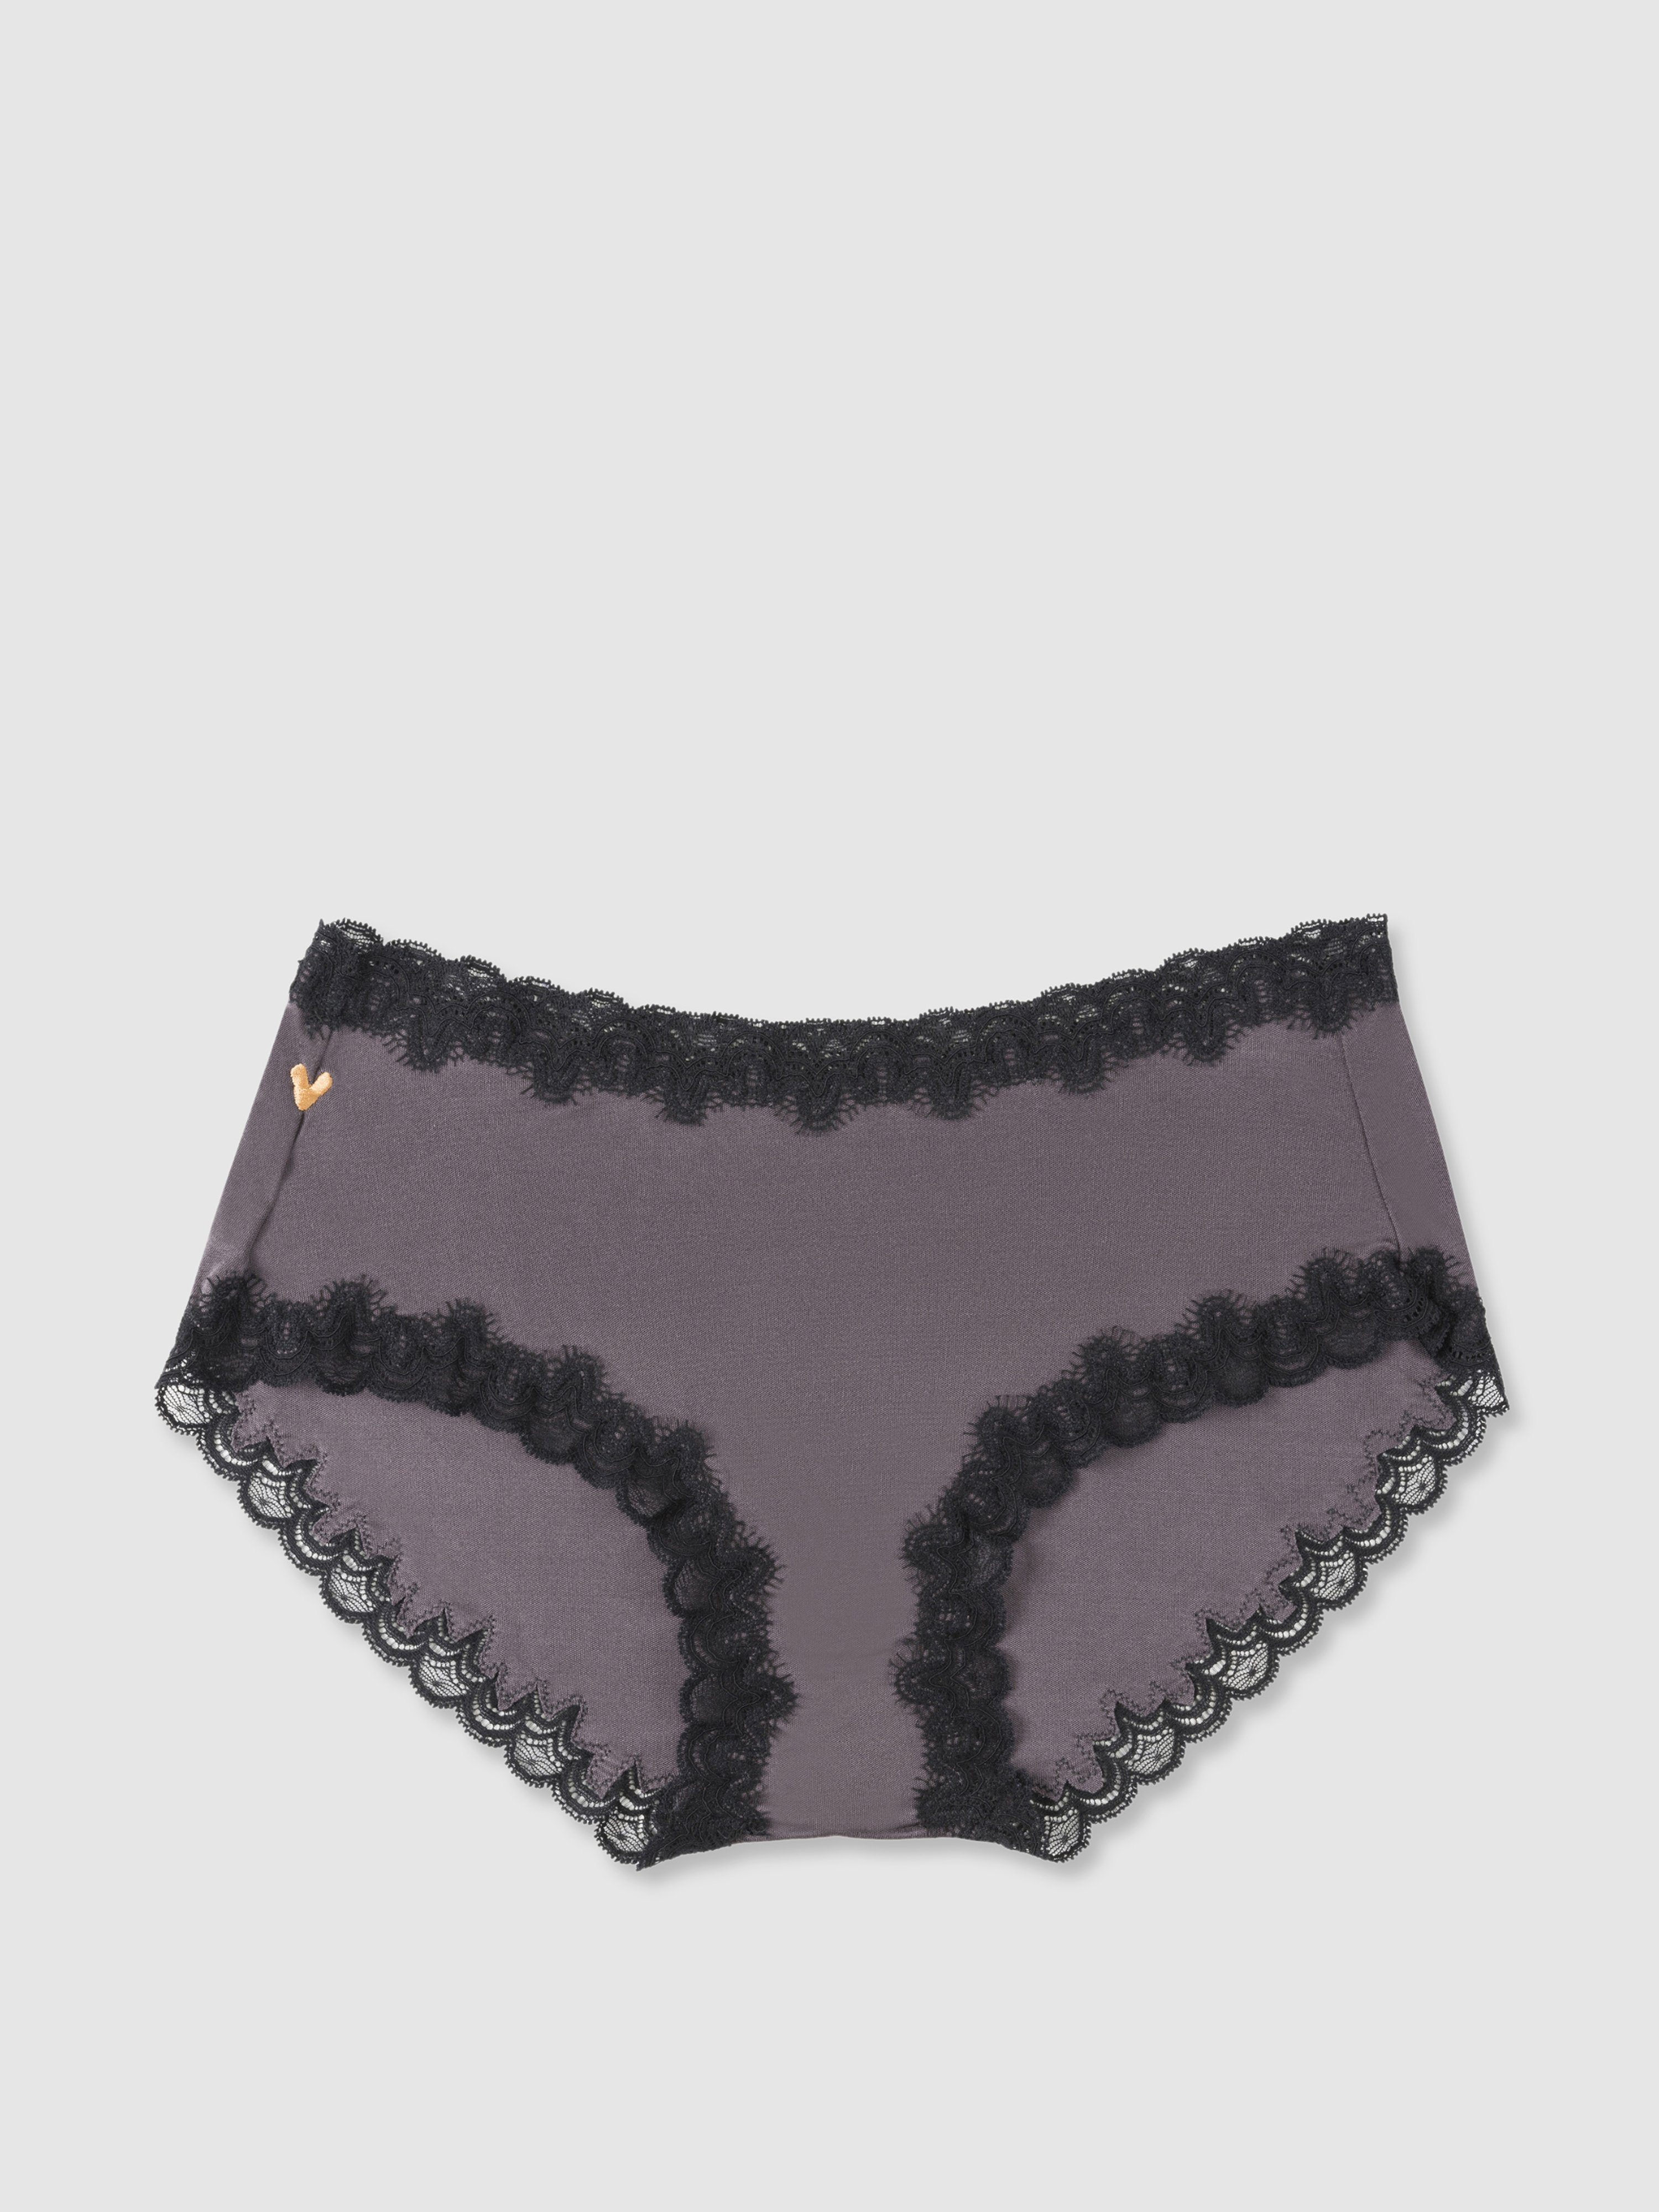 Uwila Warrior Soft Silks With Contrast Lace Panties In Black